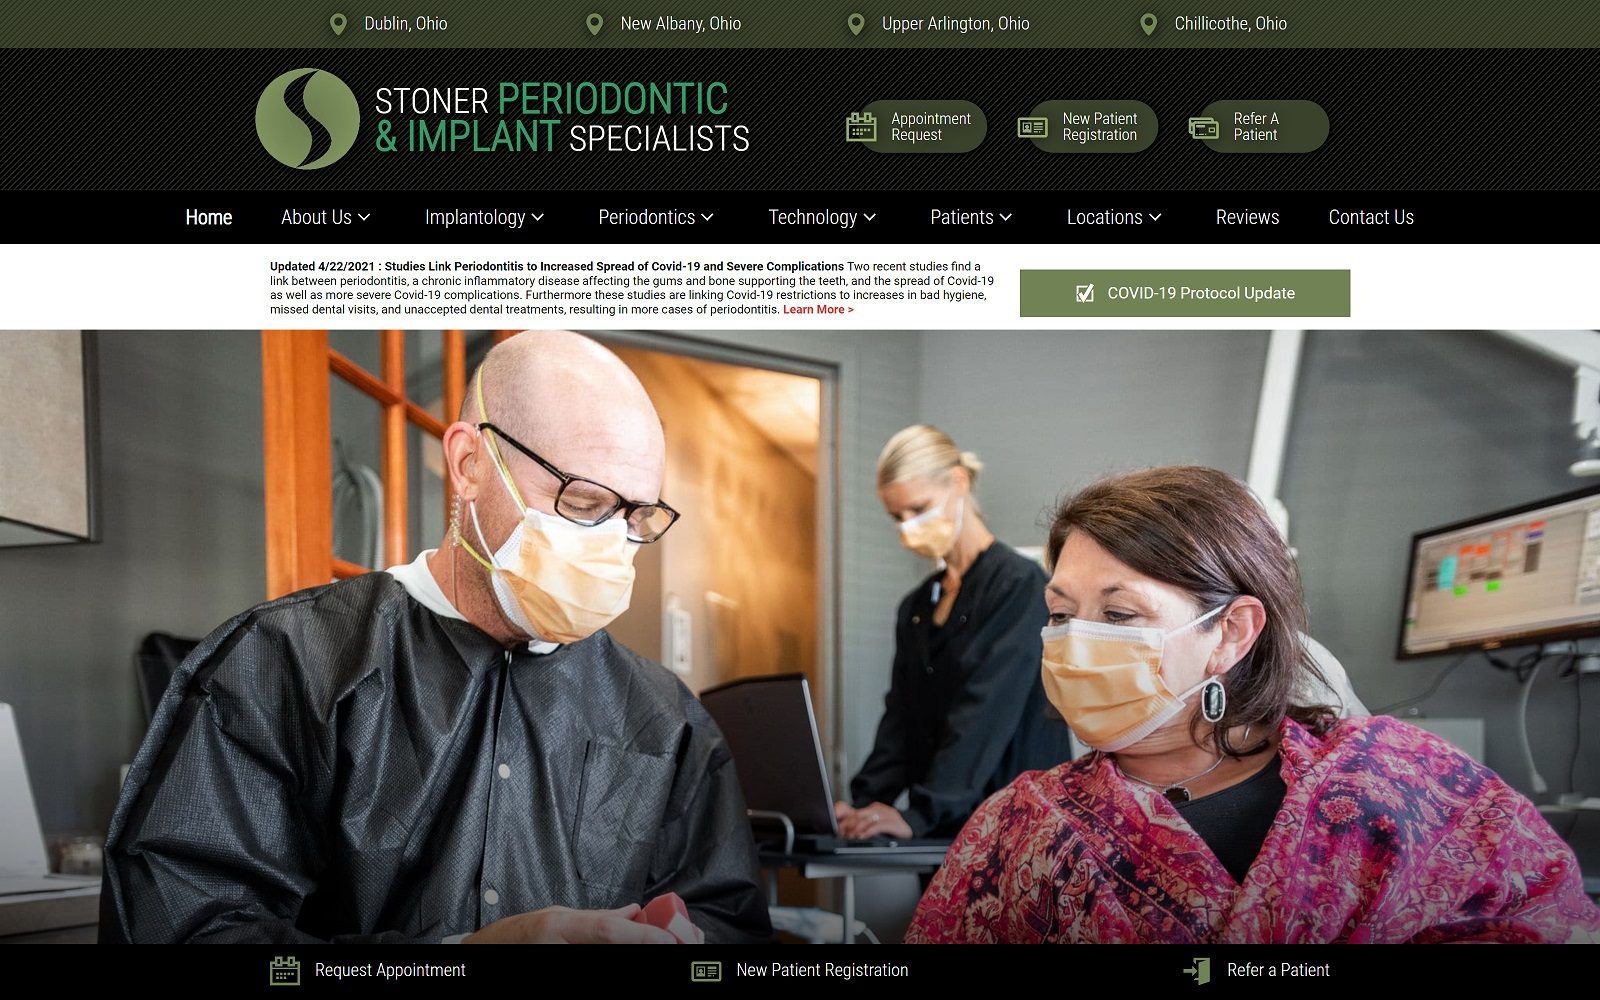 The Screenshot of Stoner Periodontic & Implant Specialists - Upper Arlington Website